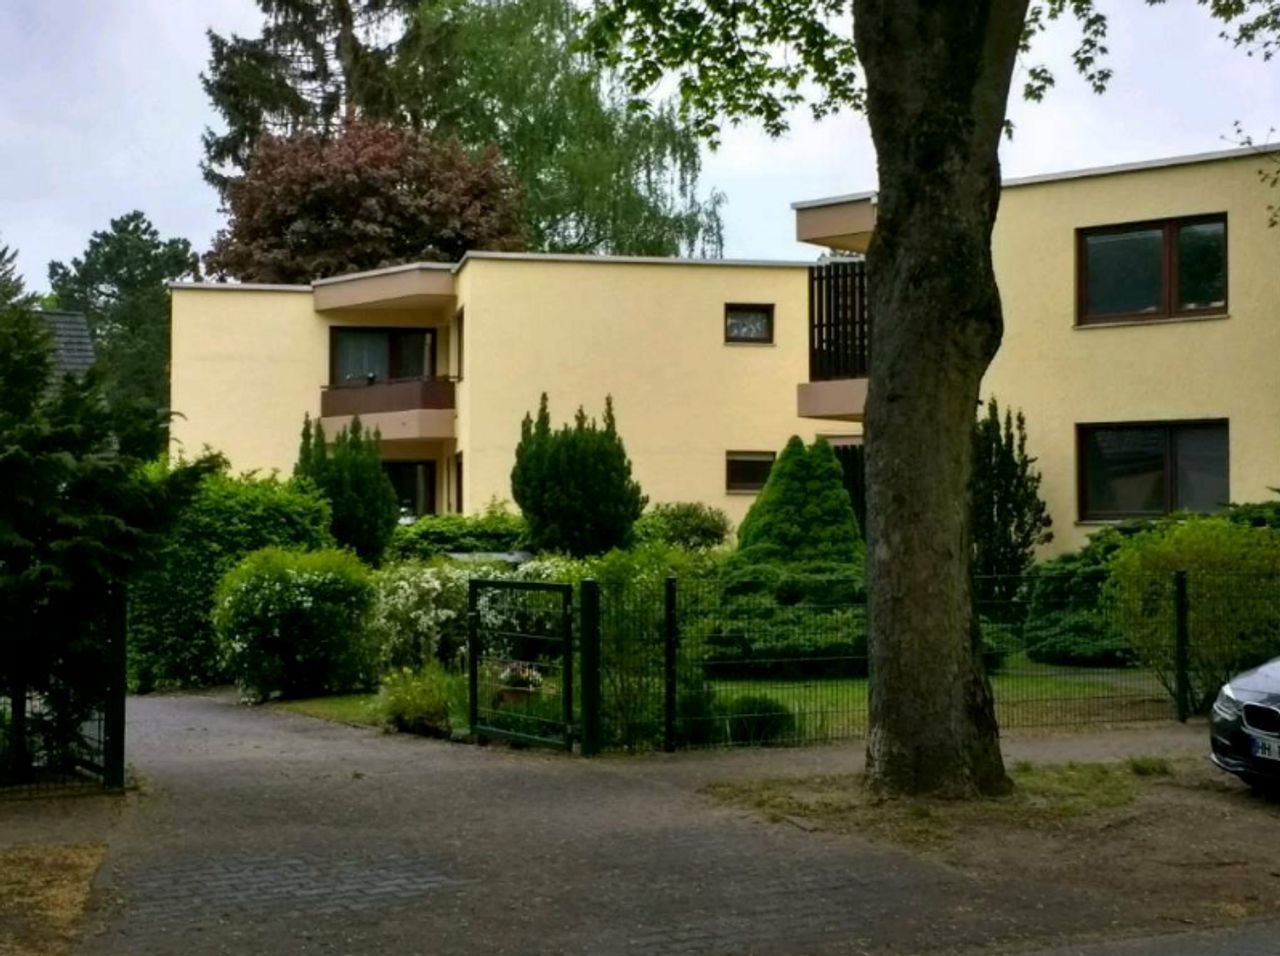 Spacious flat located in Heiligensee